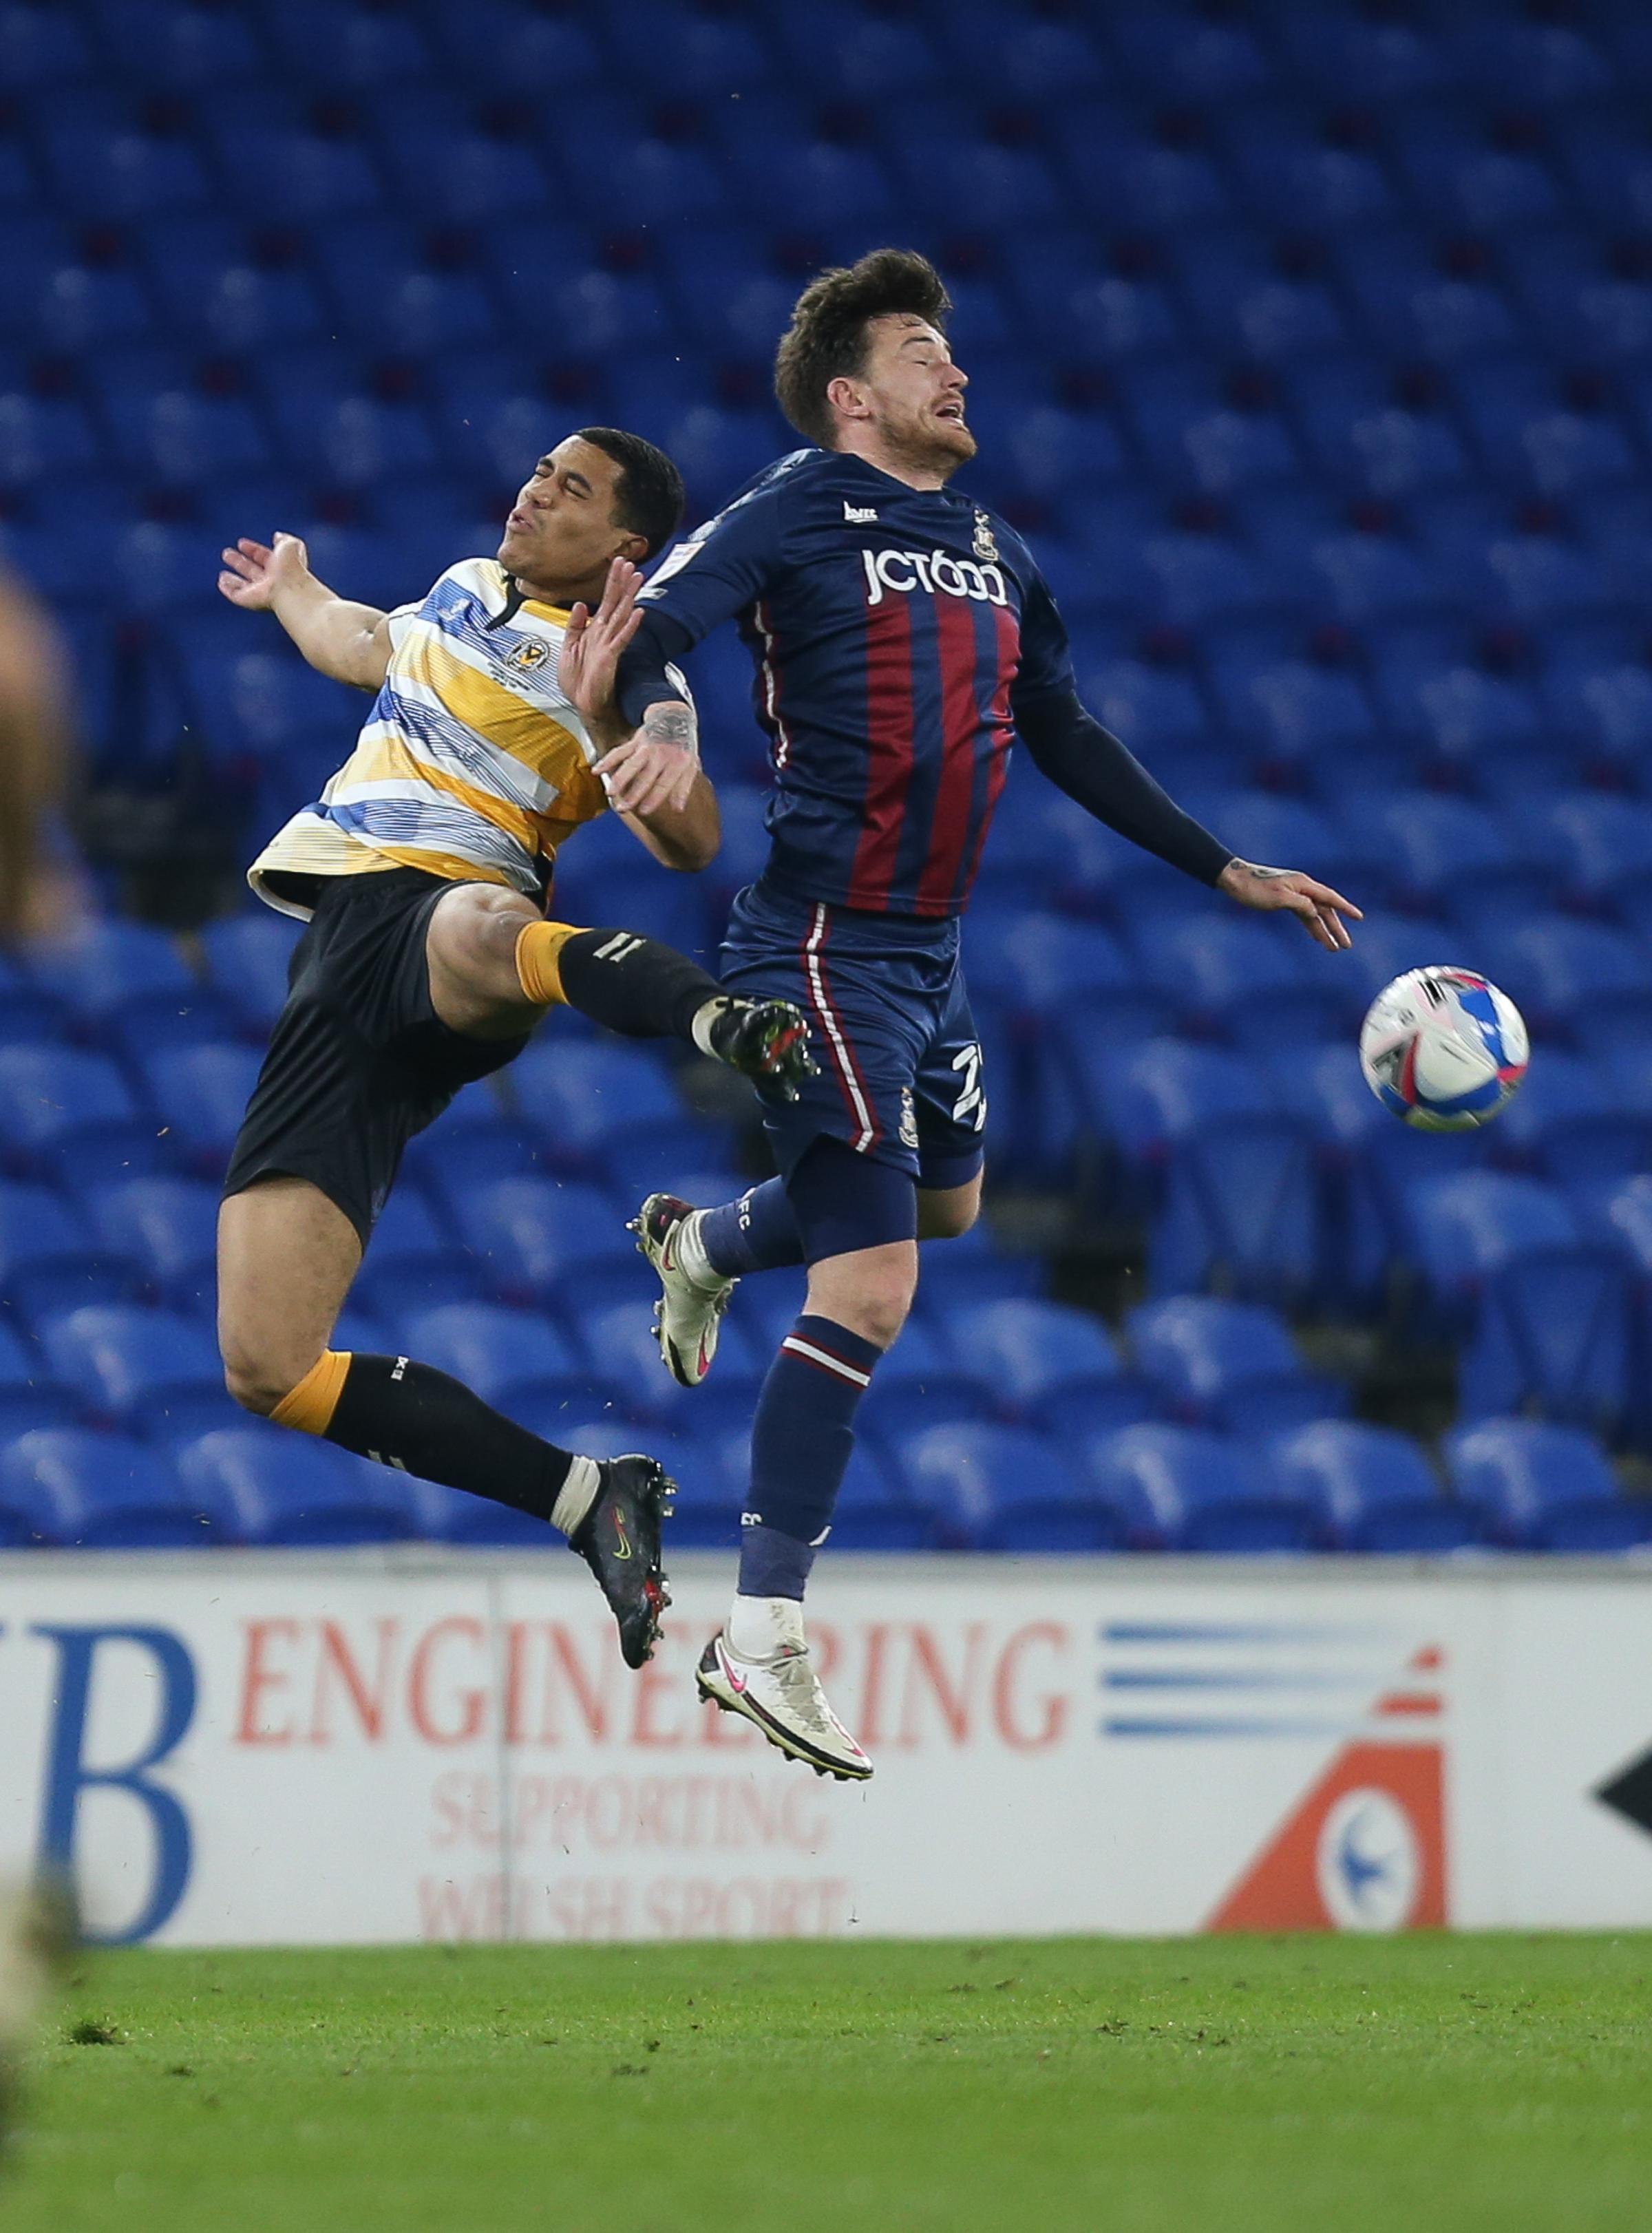 TEST: Bradford gave Newport defender Priestley Farquharson a challenging night